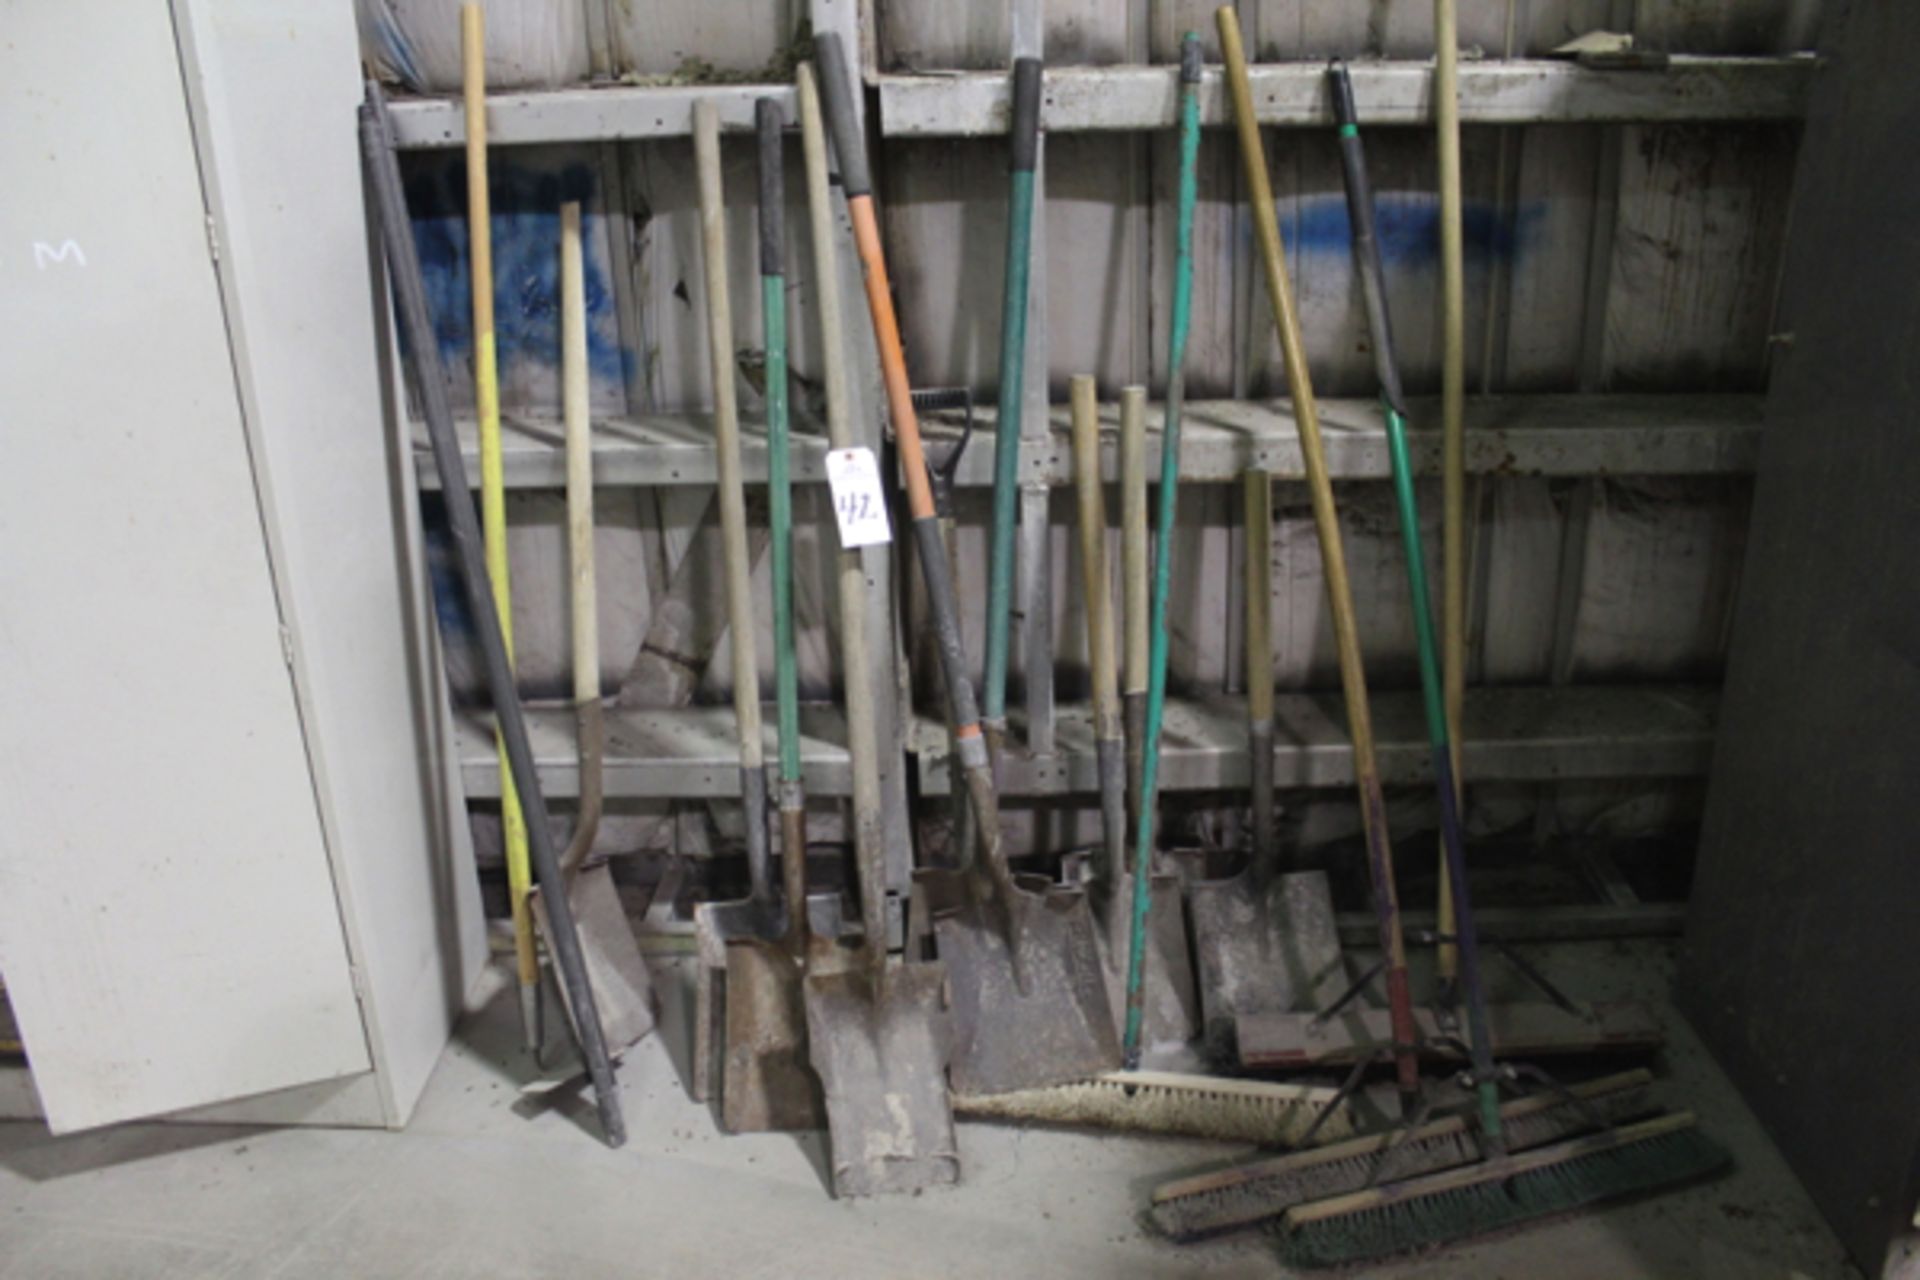 Lot of Brooms & Shovels | Location: Maintenance Building